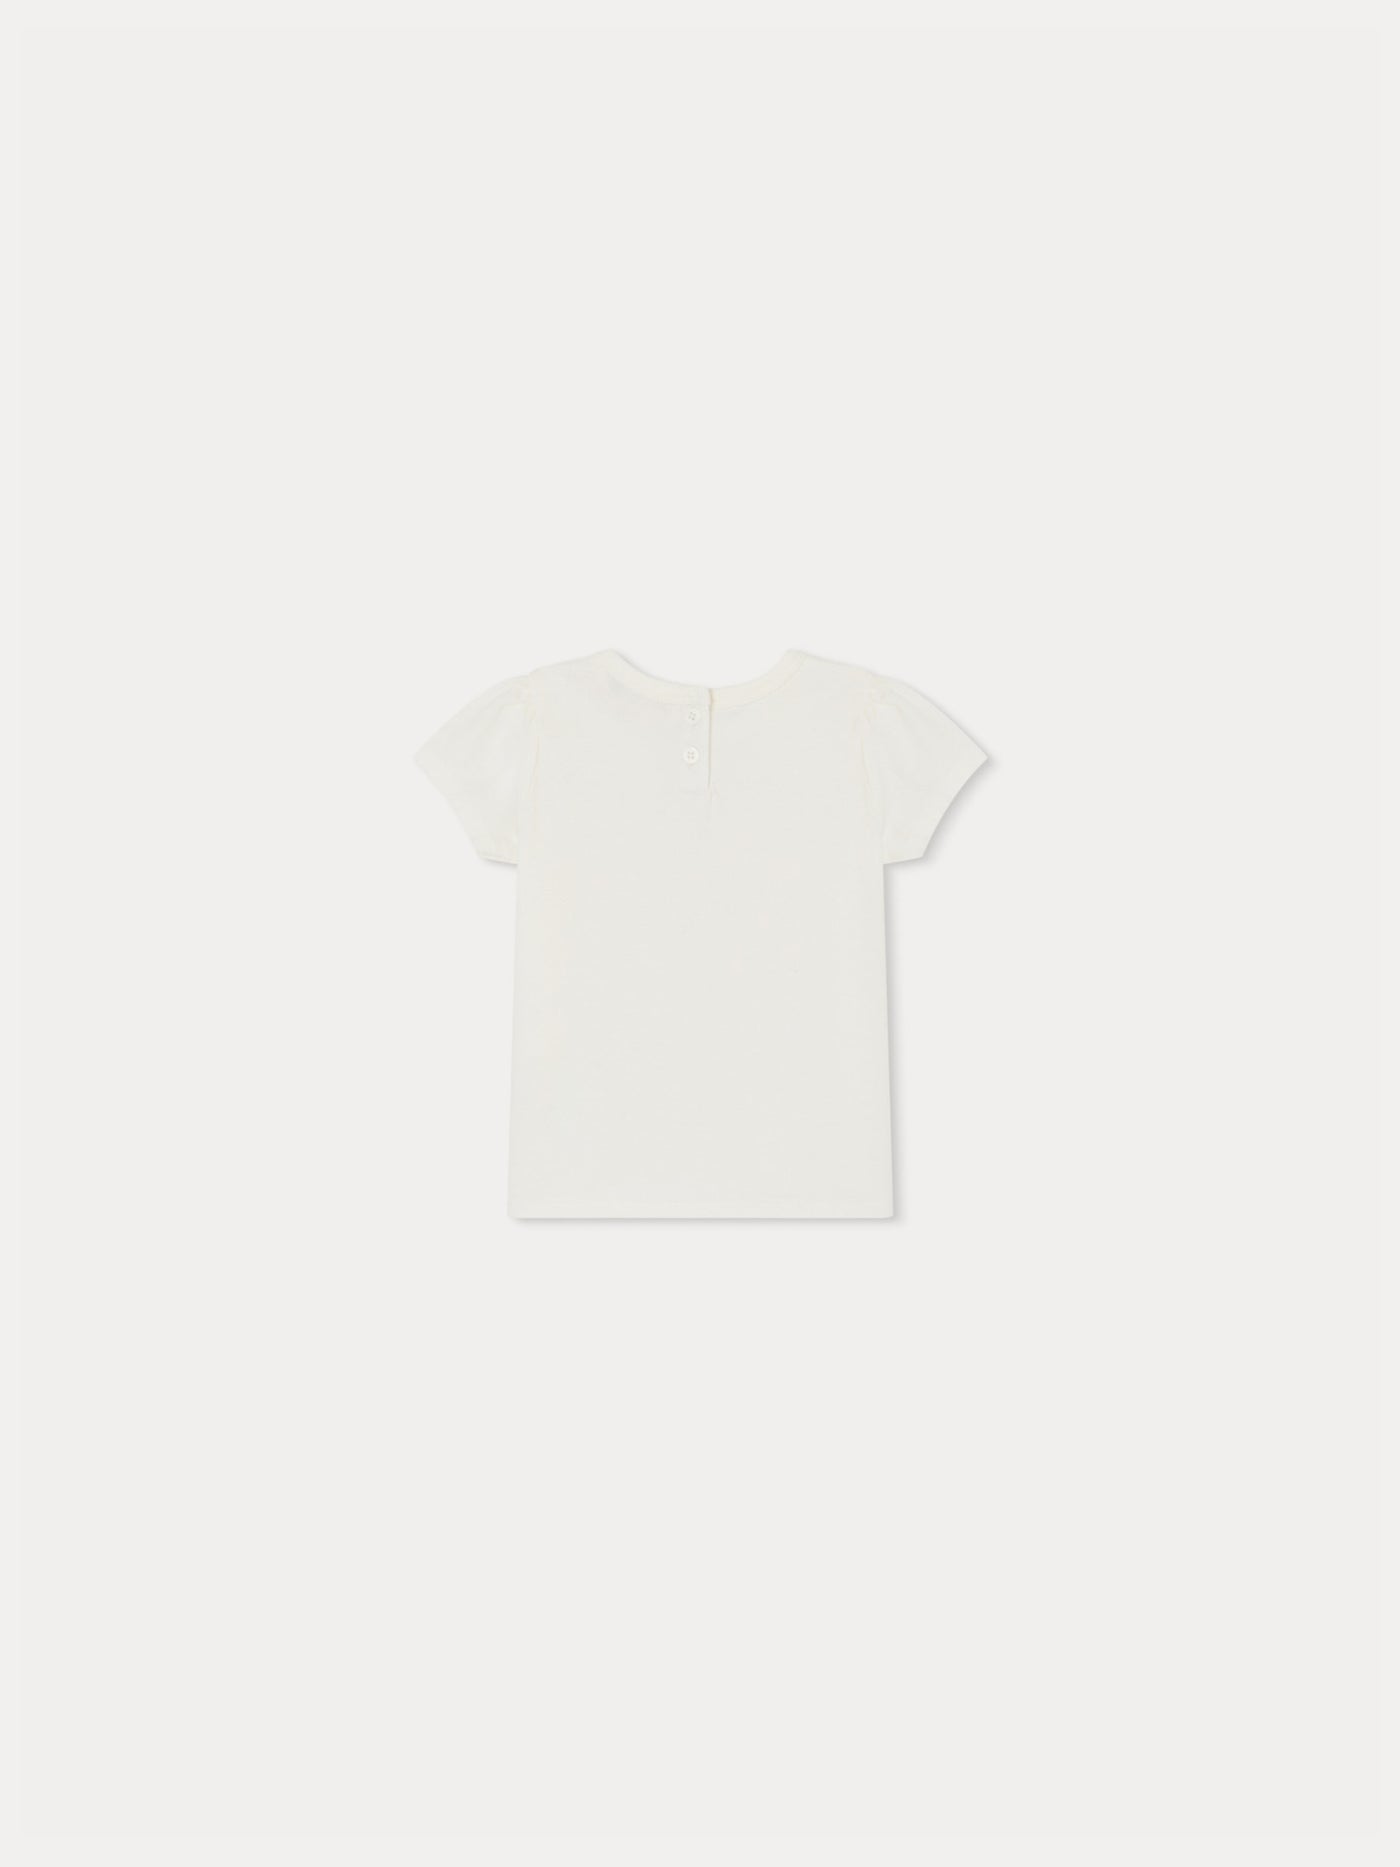 T-shirt Cira blanc lait